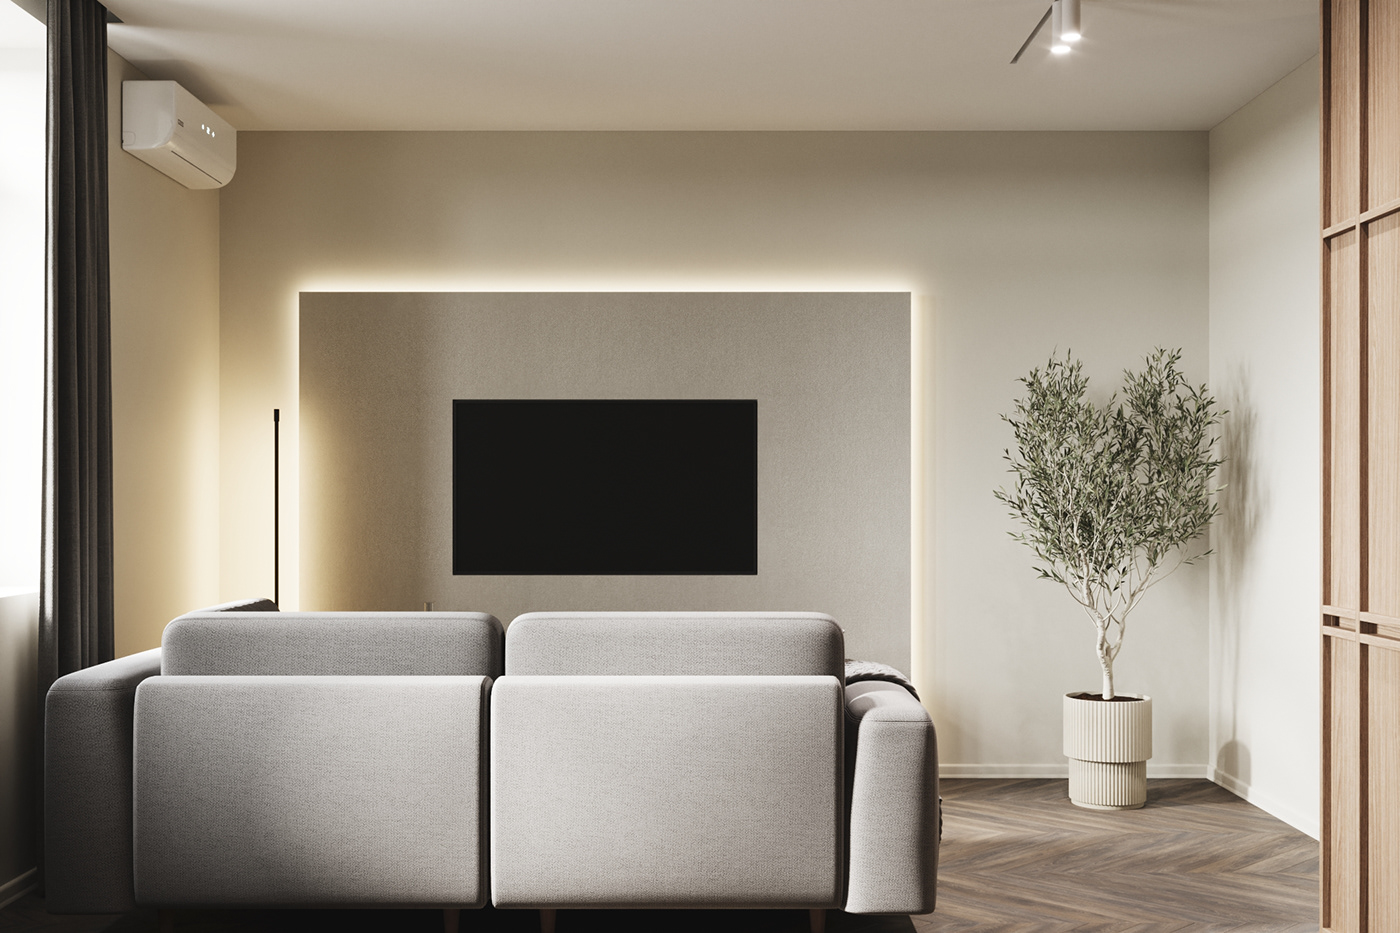 Interior architecture interior design  3ds max corona CGI visualization дизайн интерьера Визуализация интерьера современный дизайн